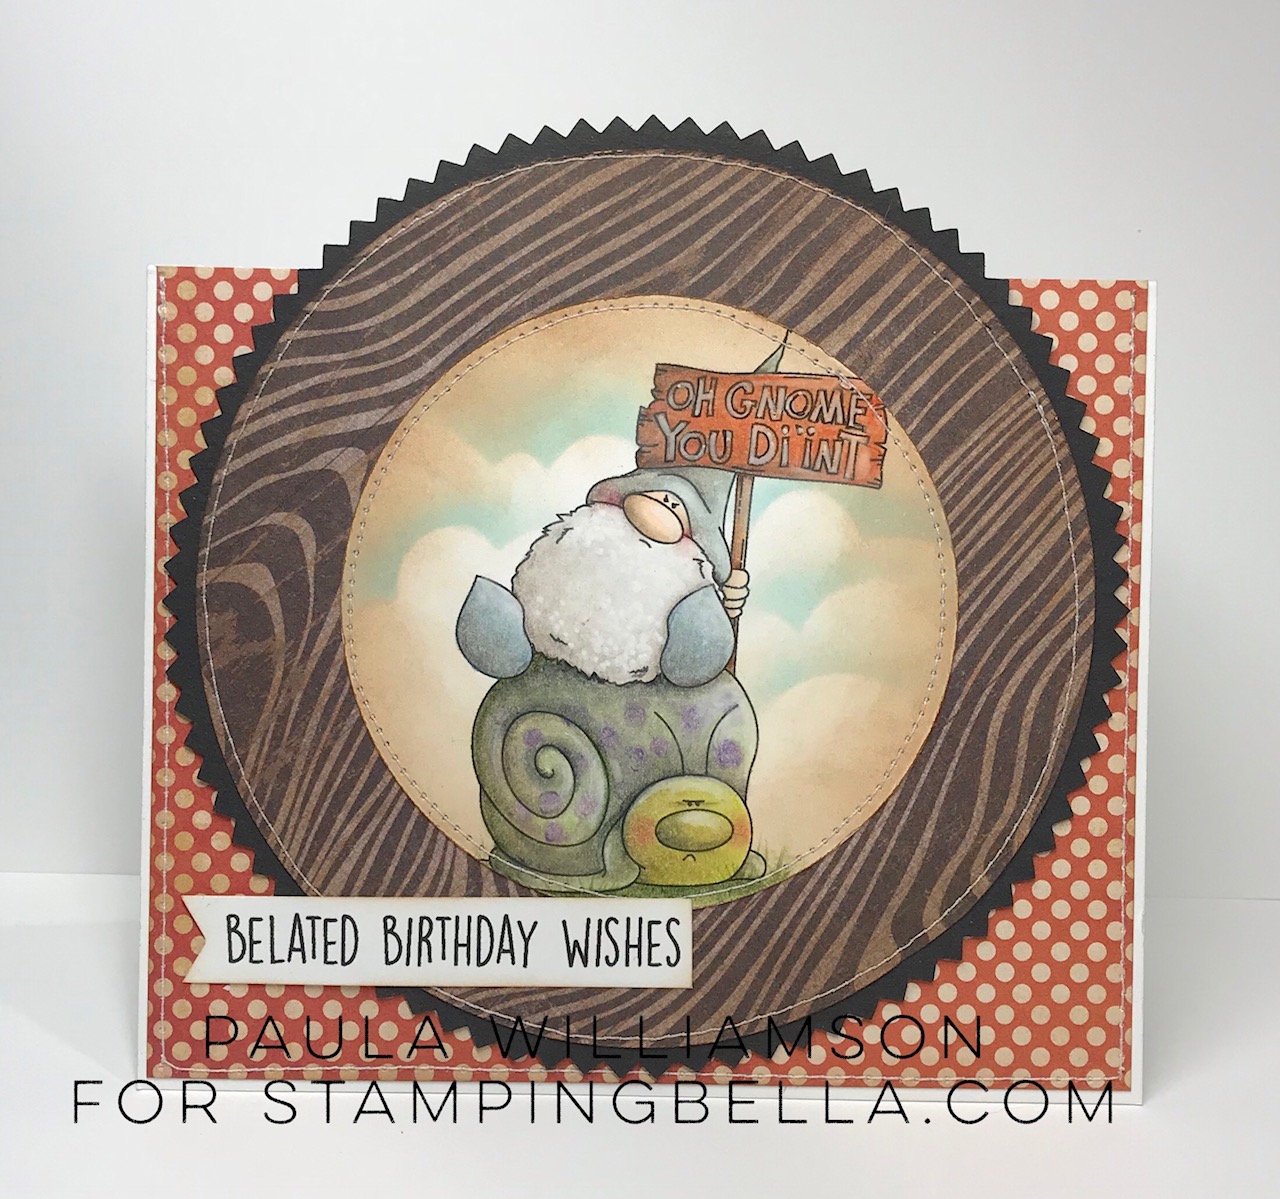 www.stampingbella.com: Rubber stamp: OH GNOME YOU DI'INT card by Paula Williamson